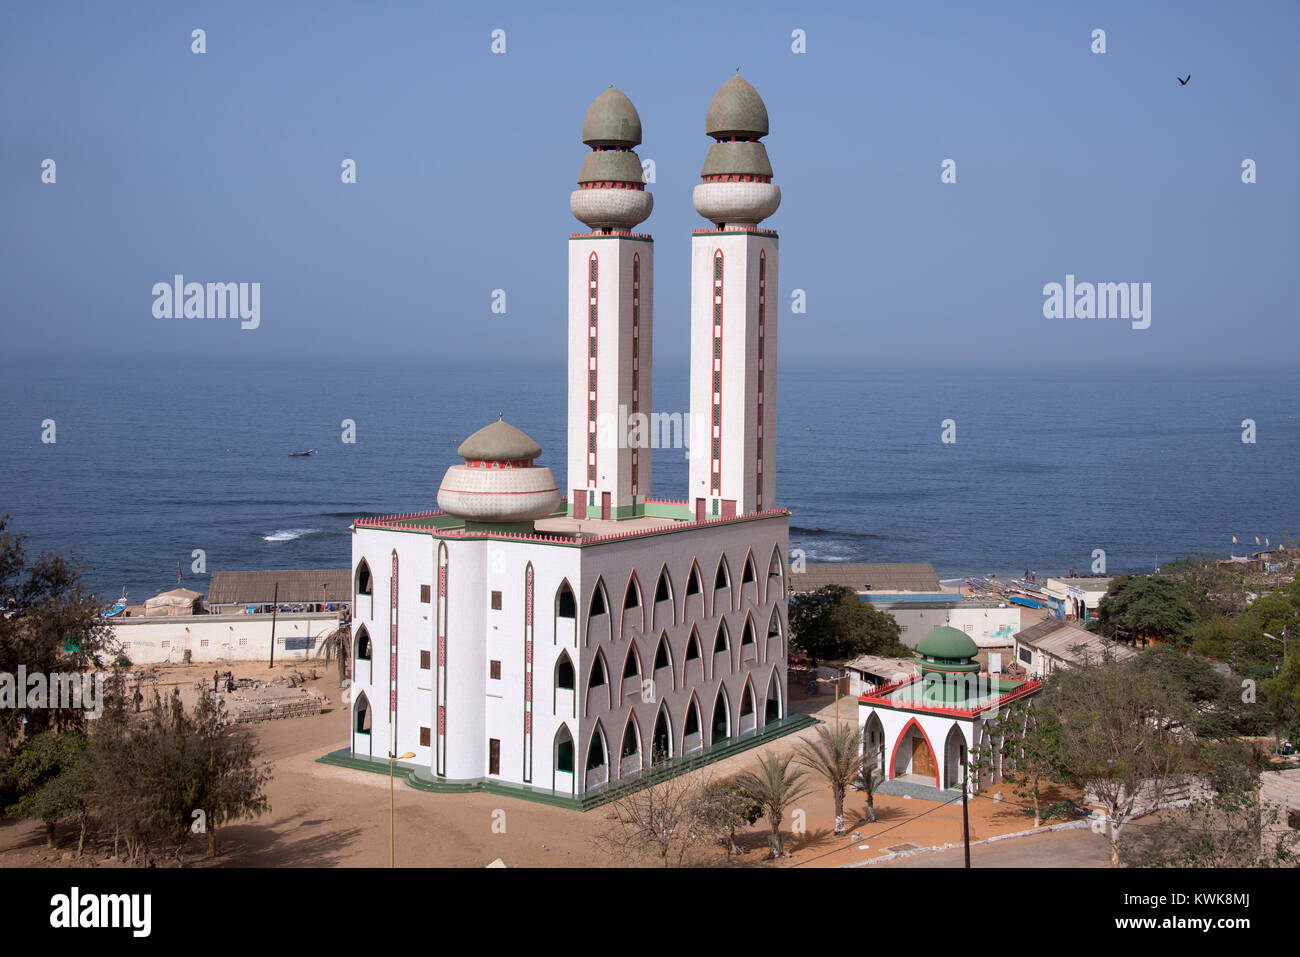 Ouakam mosque on the coast of Dakar, Senegal Stock Photo